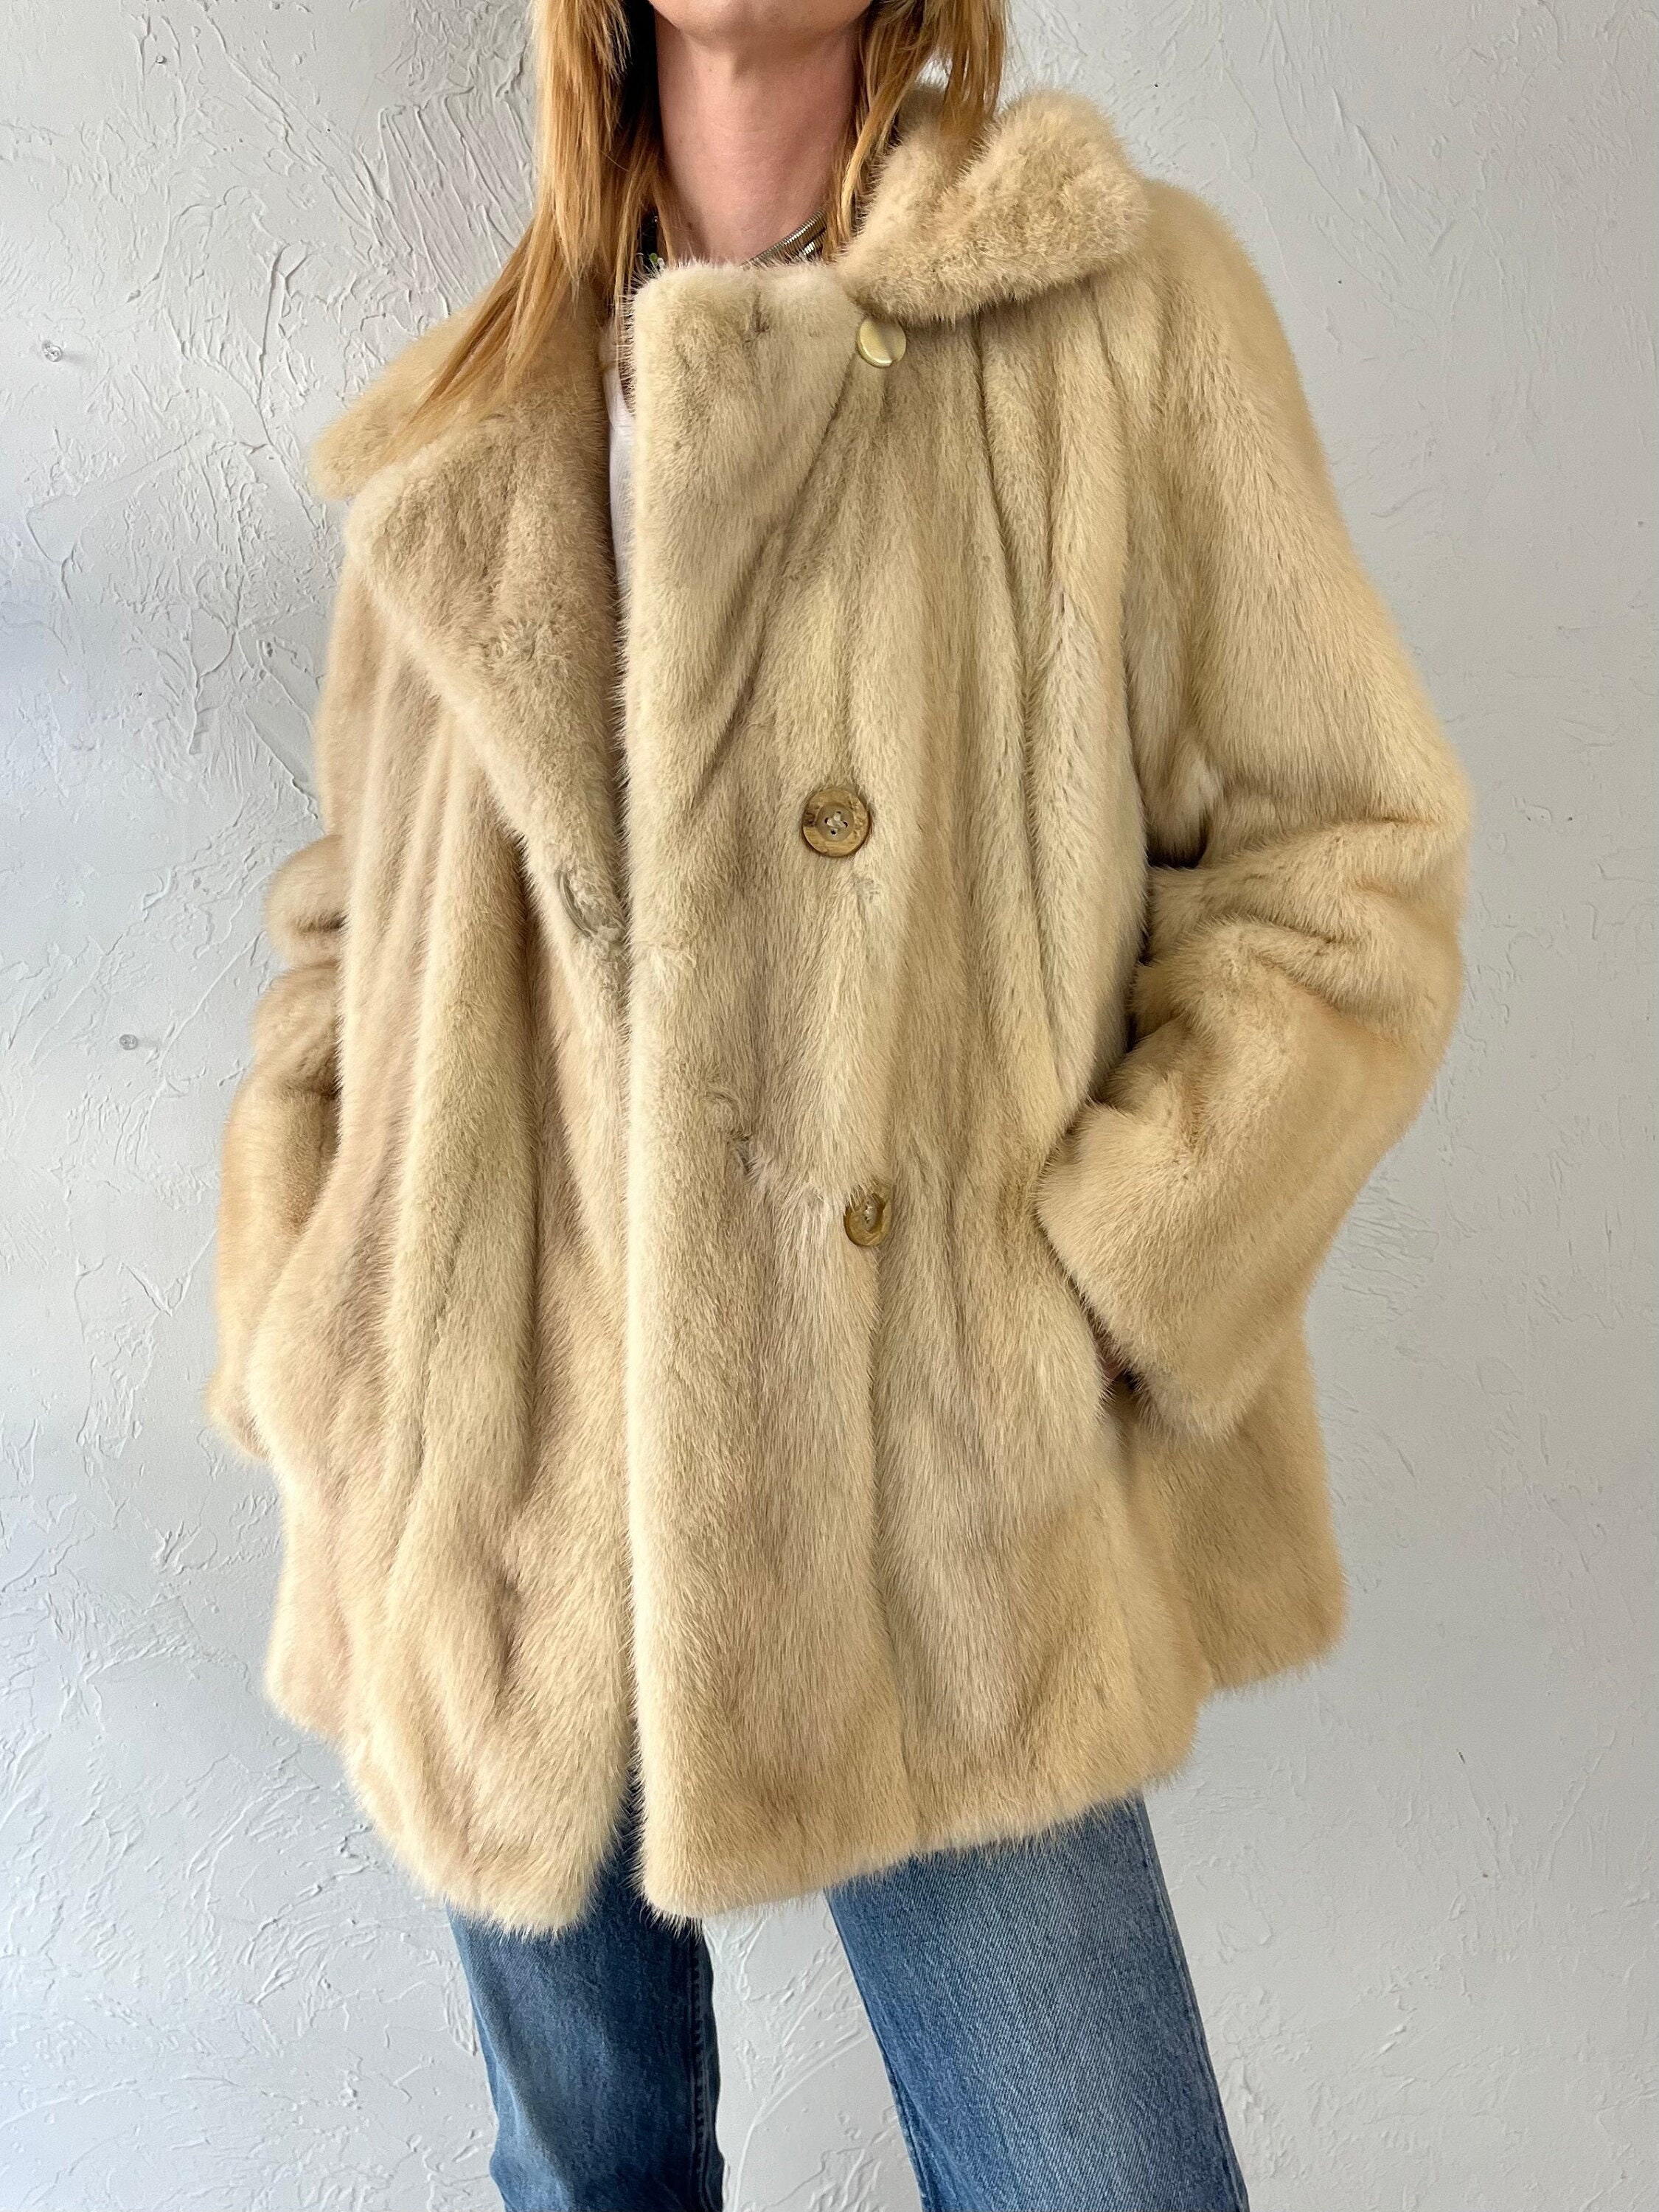 Vintage fur coat - Etsy 日本